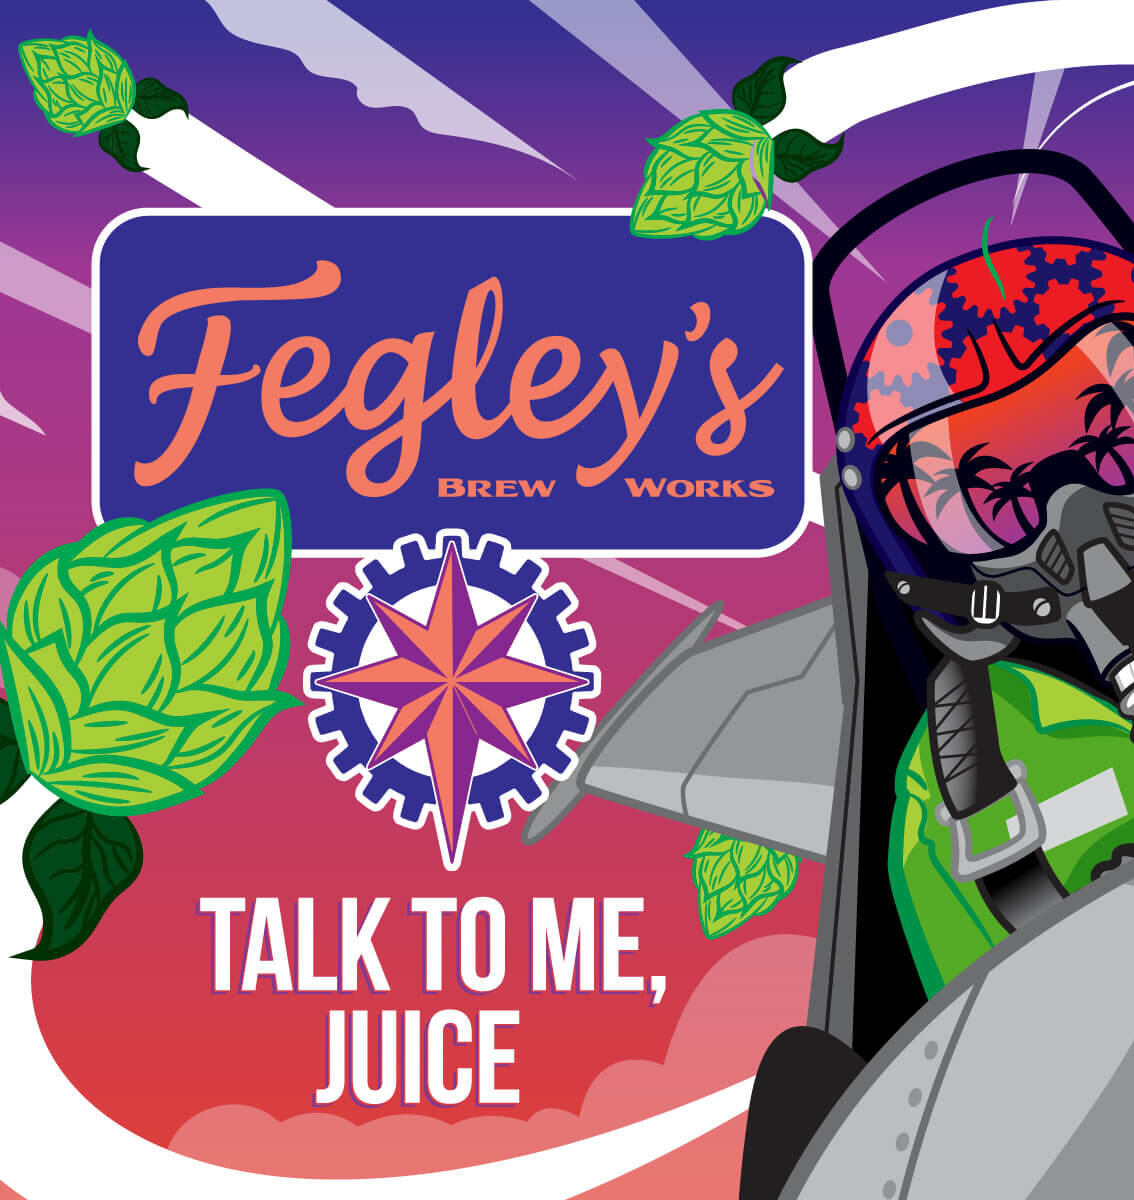 Fegley's Talk To Me Juice